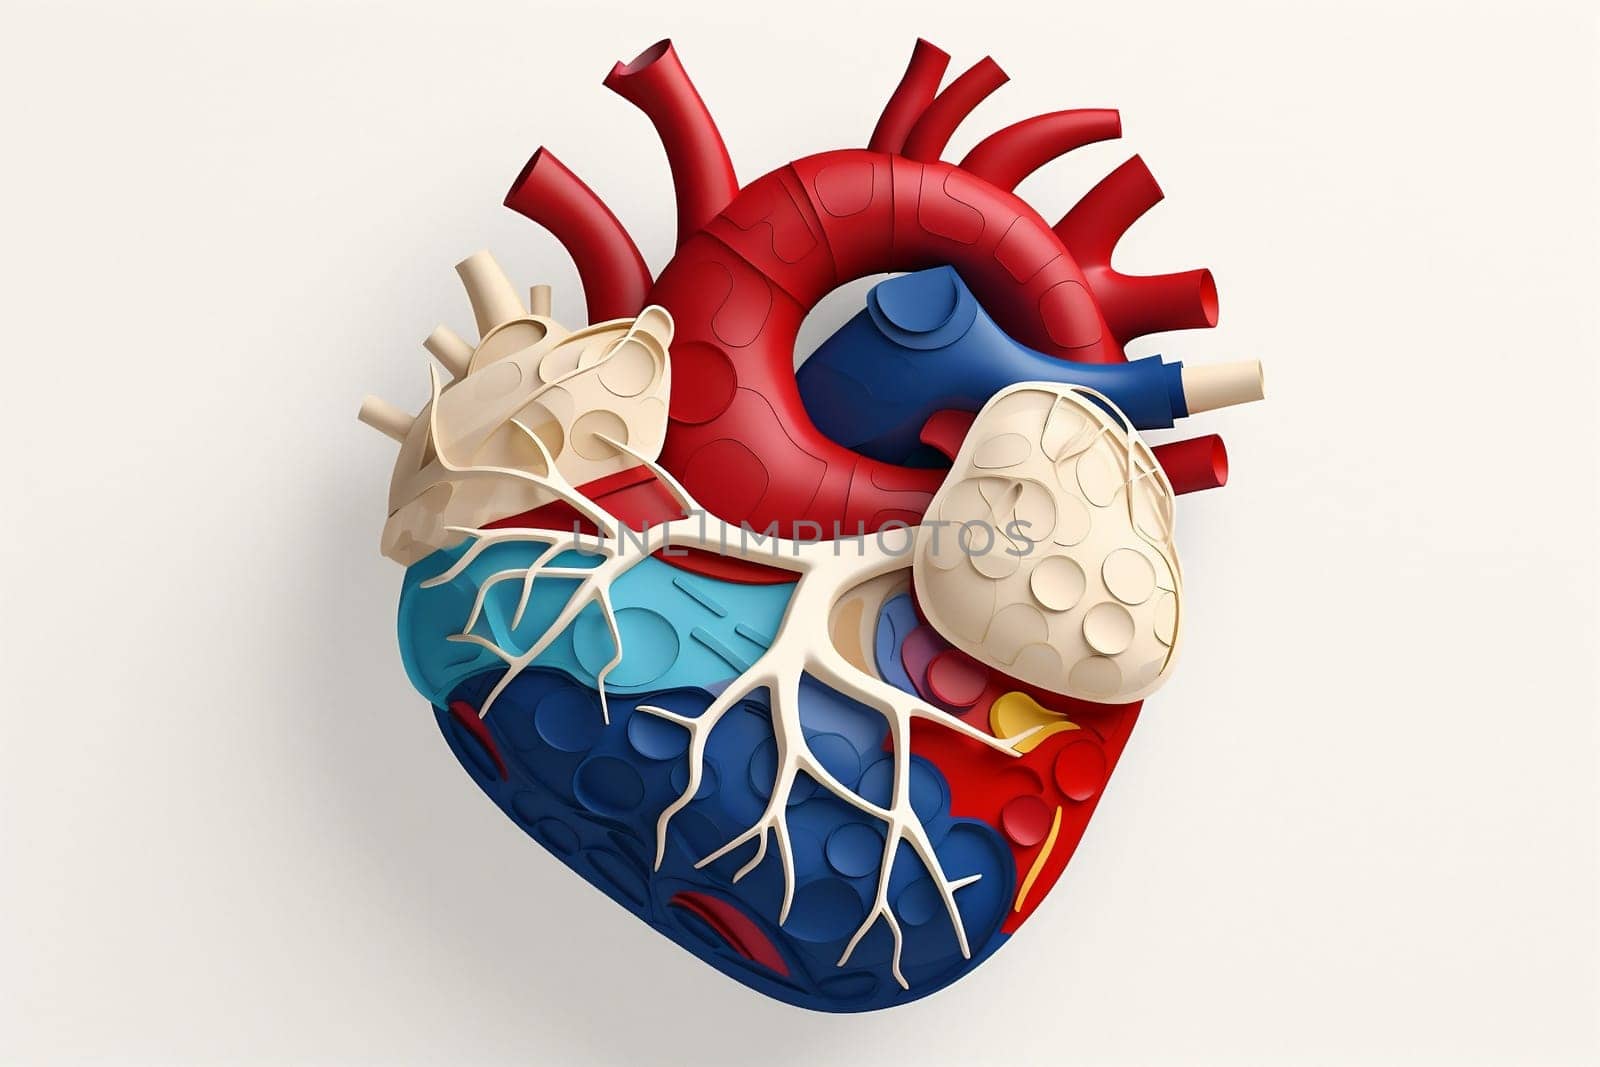 Cardiology medical anatomical science muscle heart biology organ cardiac coronary body illustration anatomy health medicine artery aorta blood human red